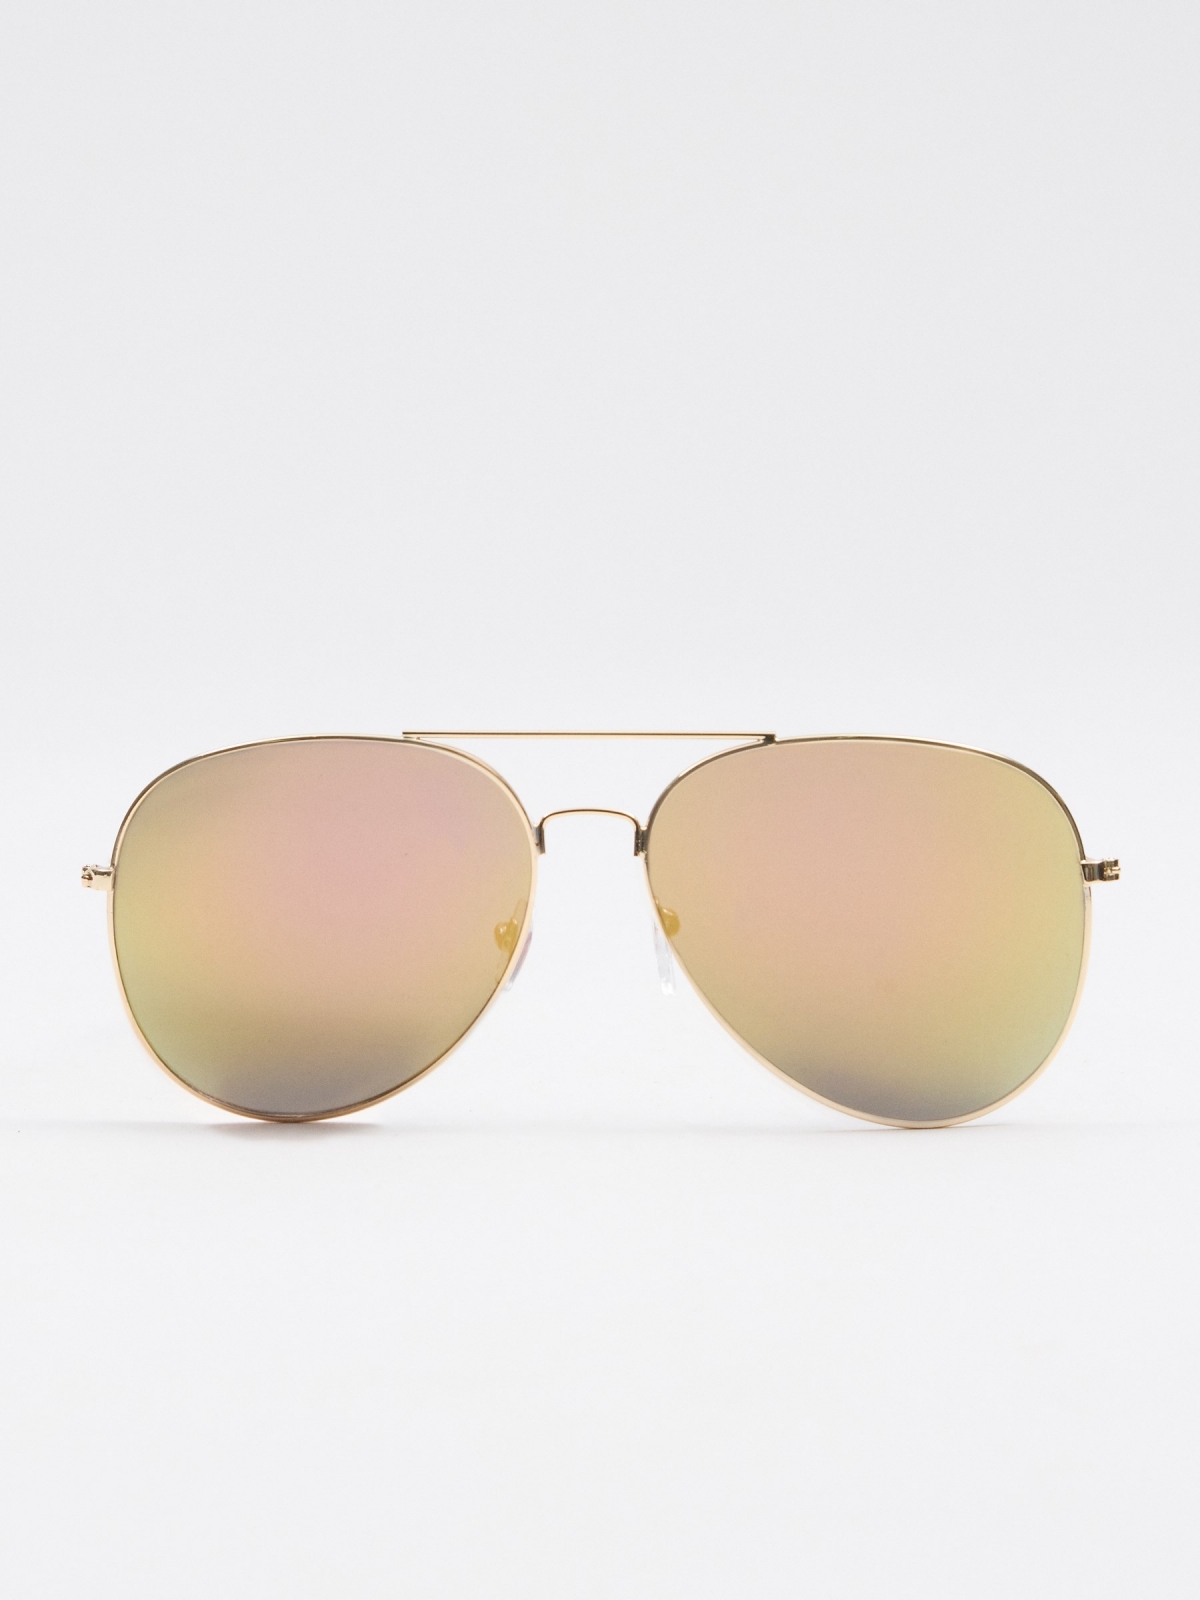 Drop sunglasses pink